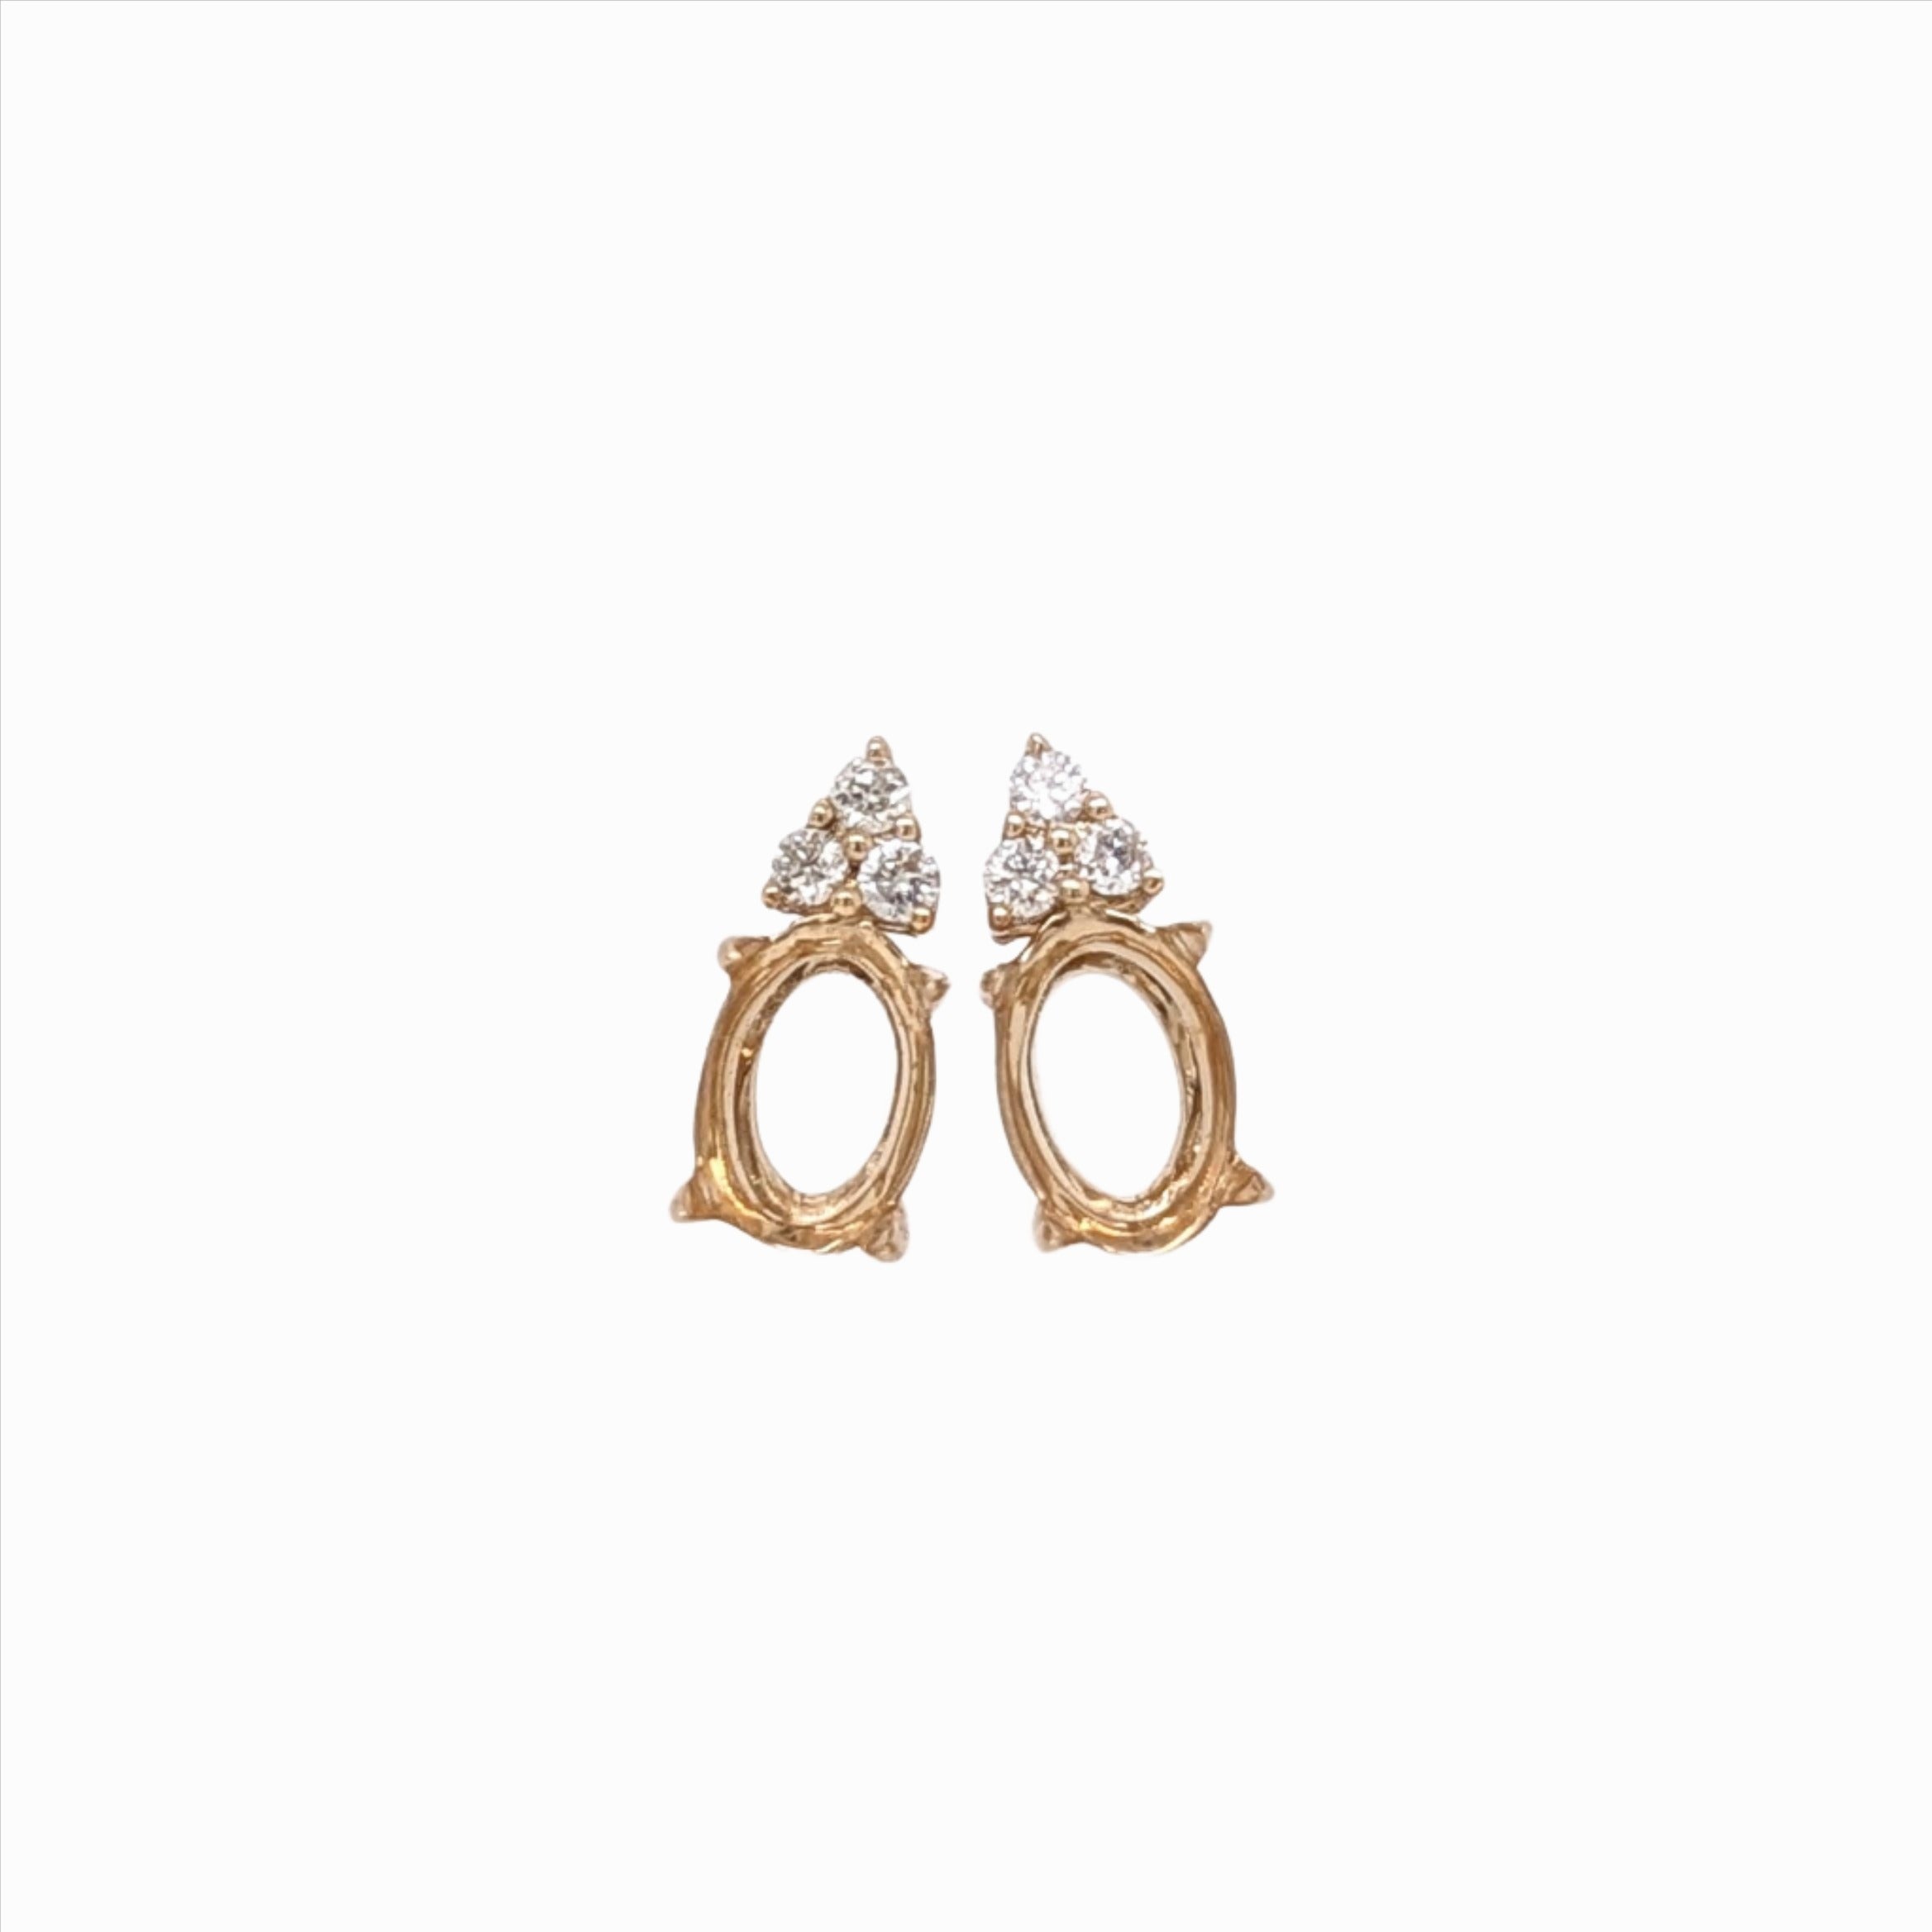 Earrings Semi Mount w Natural Diamonds in Solid 14K Gold Oval 6x4mm